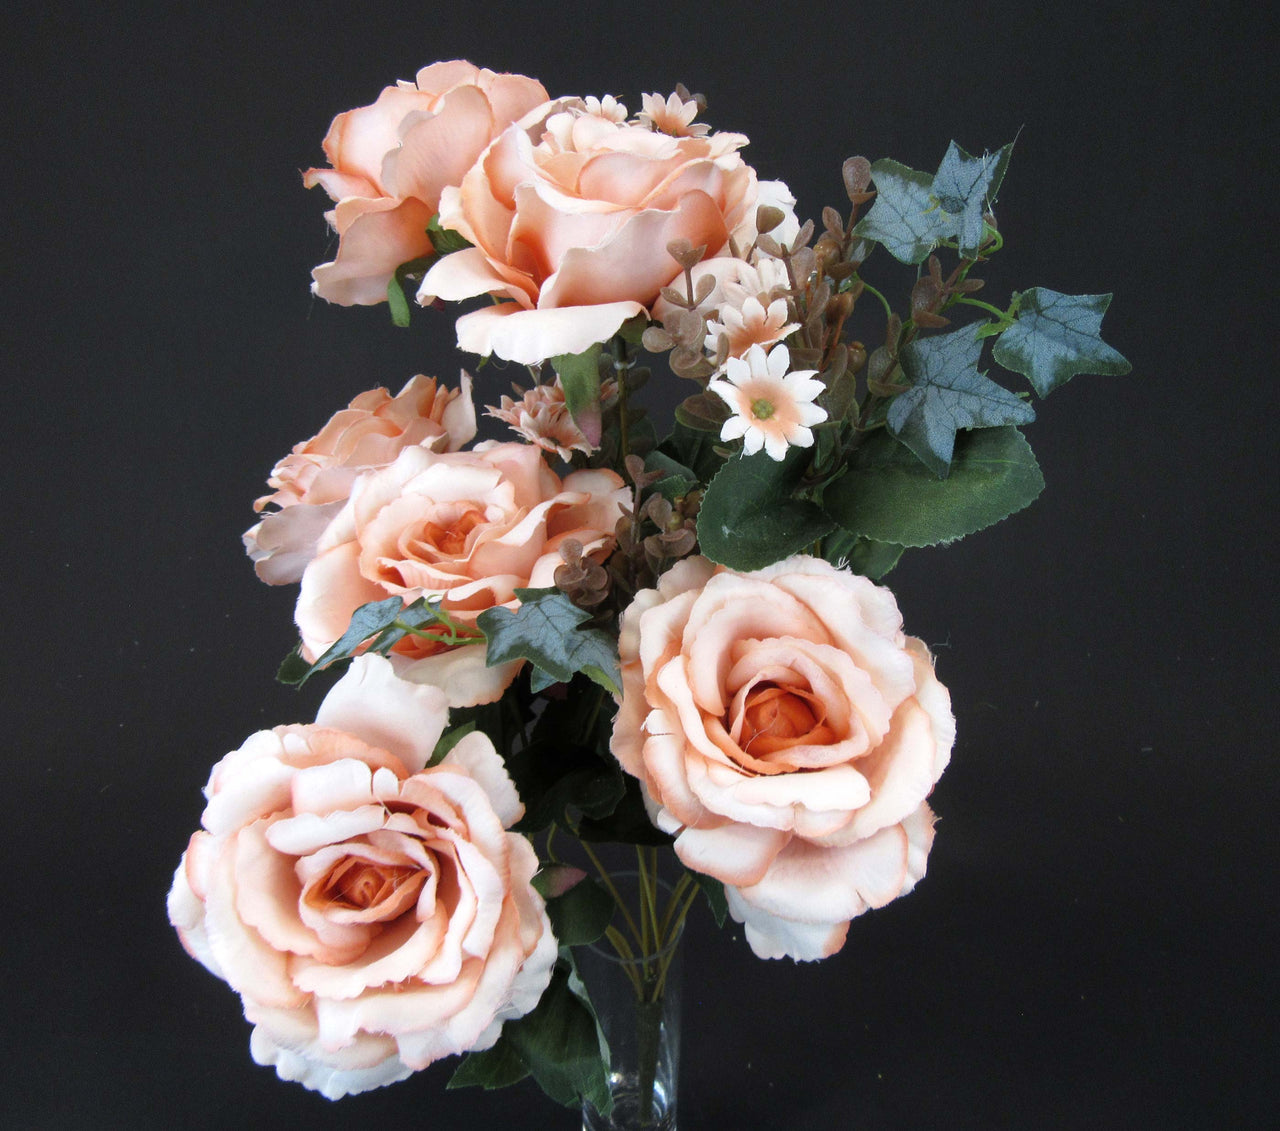 HCFL5831 - Peach Rose/Daisy Bouquet